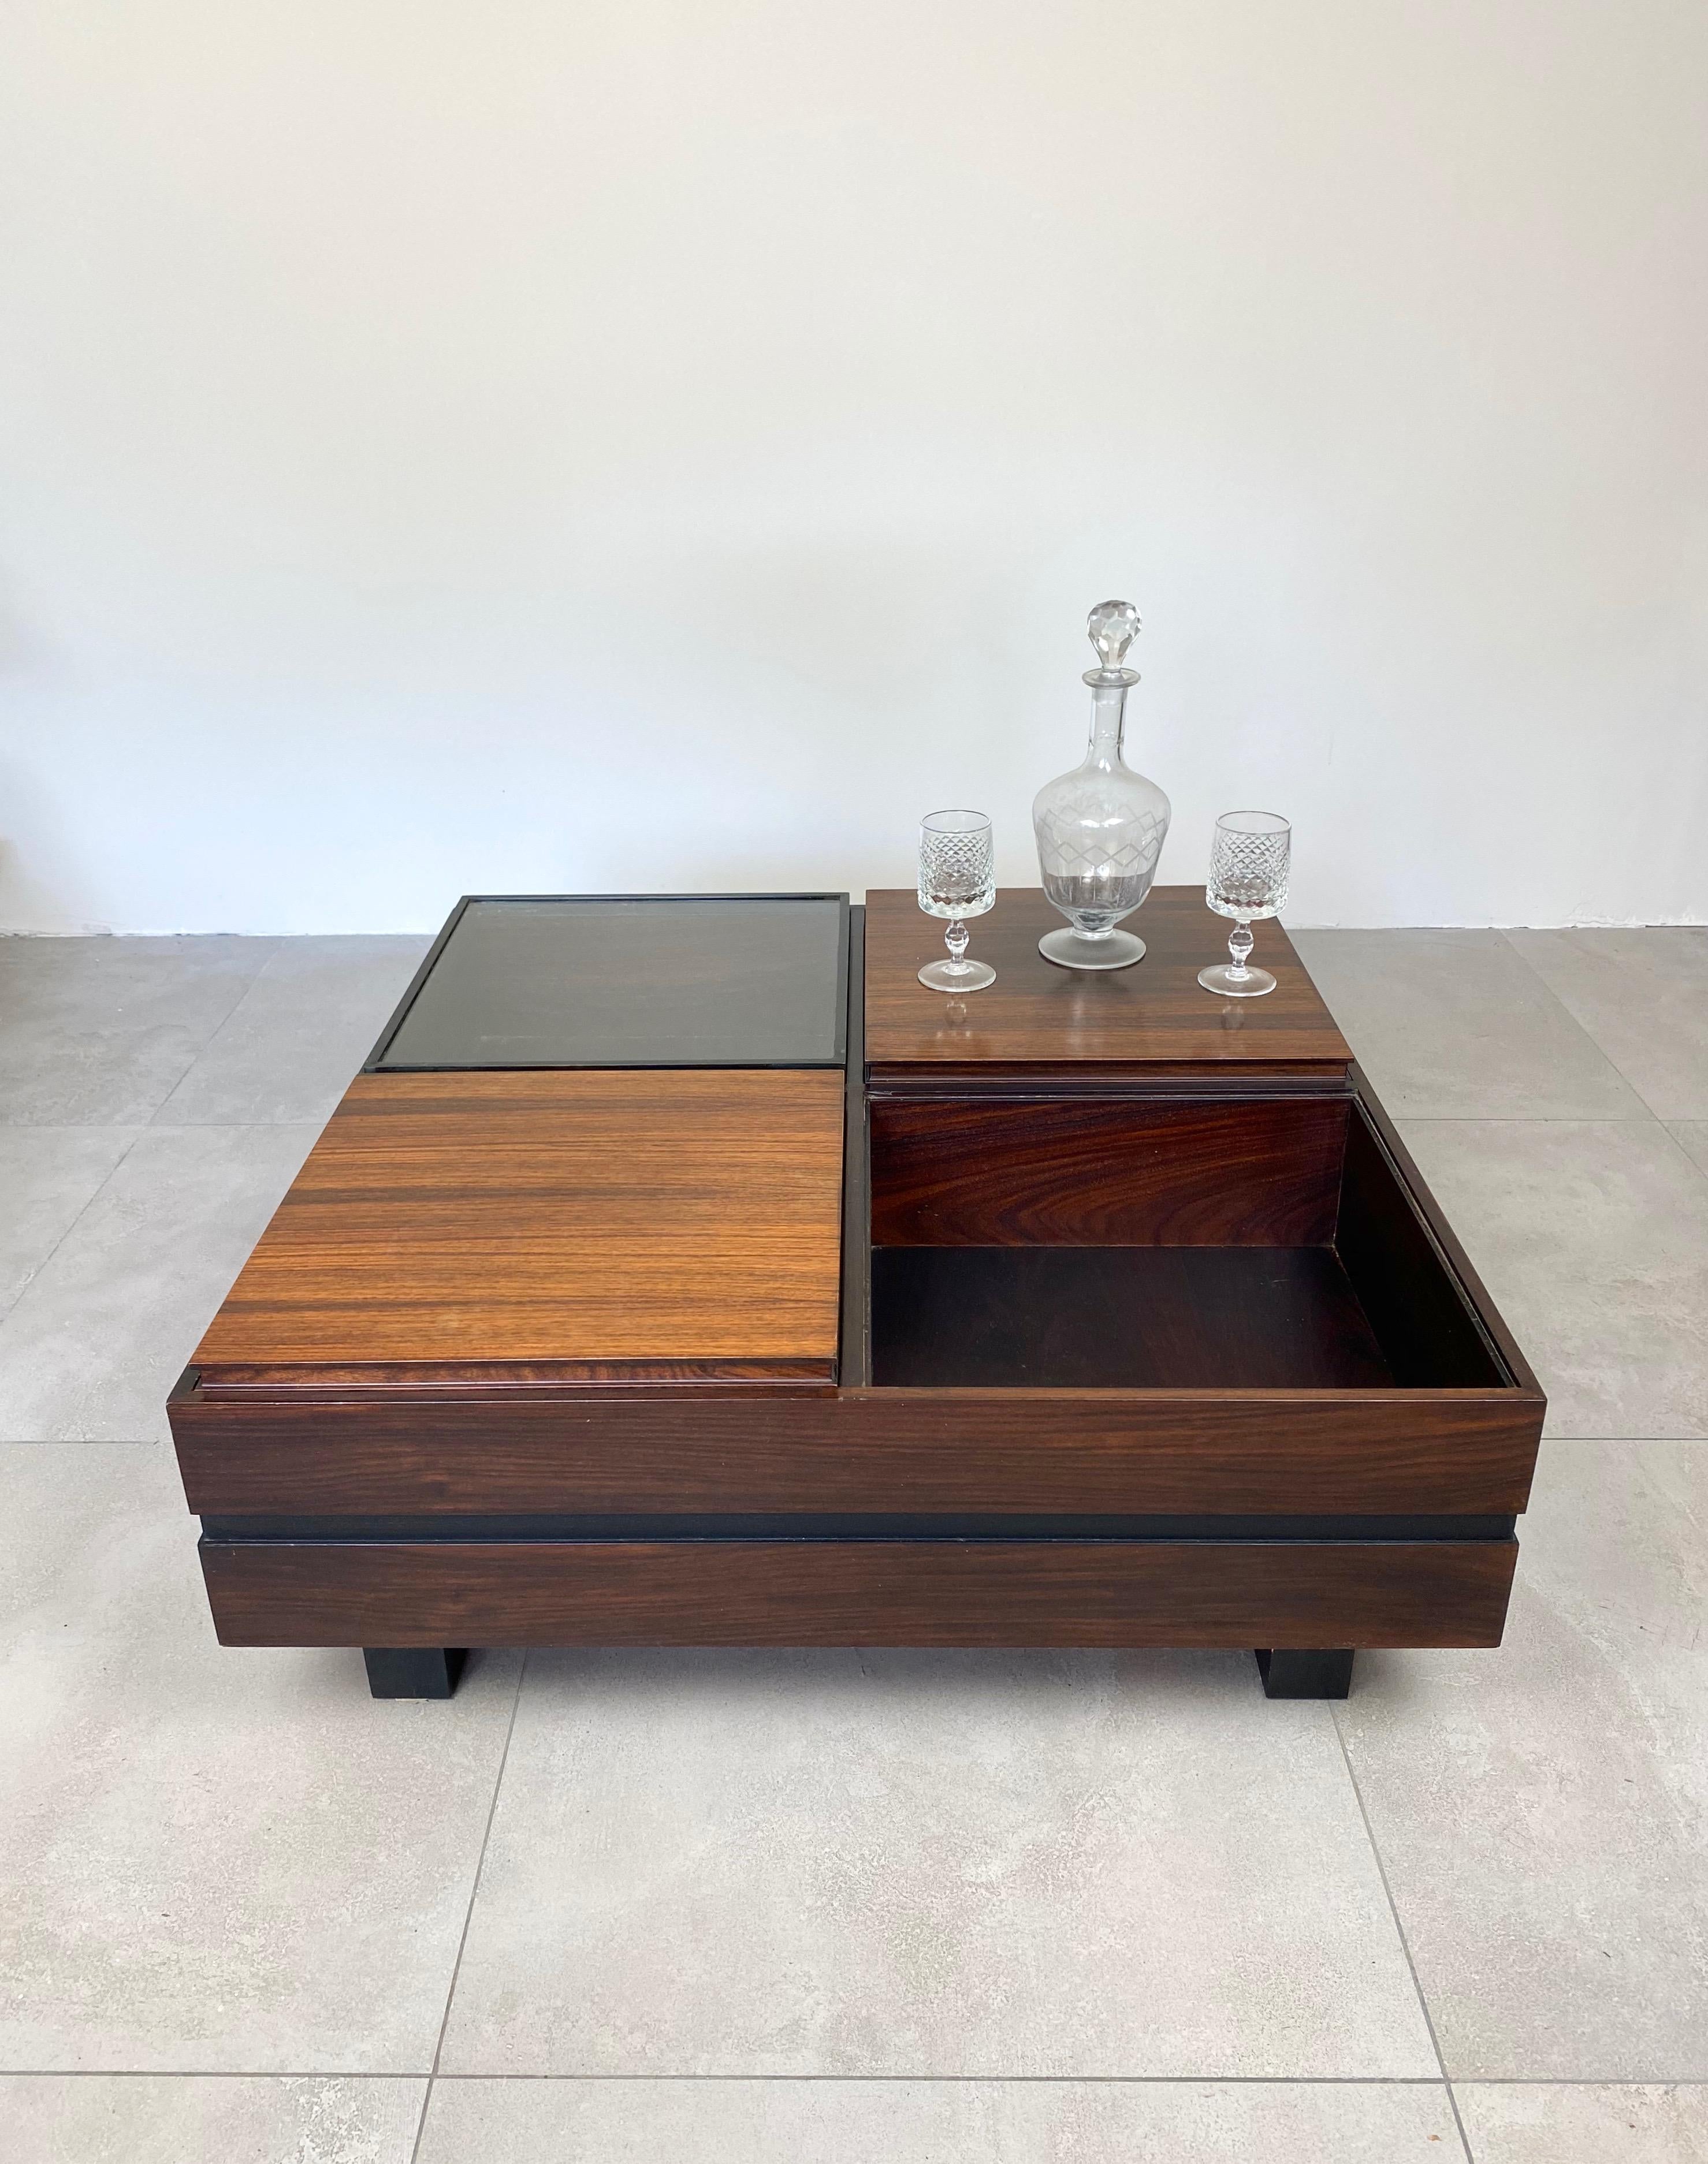 Metal Luigi Sormani Square Modular Coffee Table in Wood, Italy, 1960s For Sale